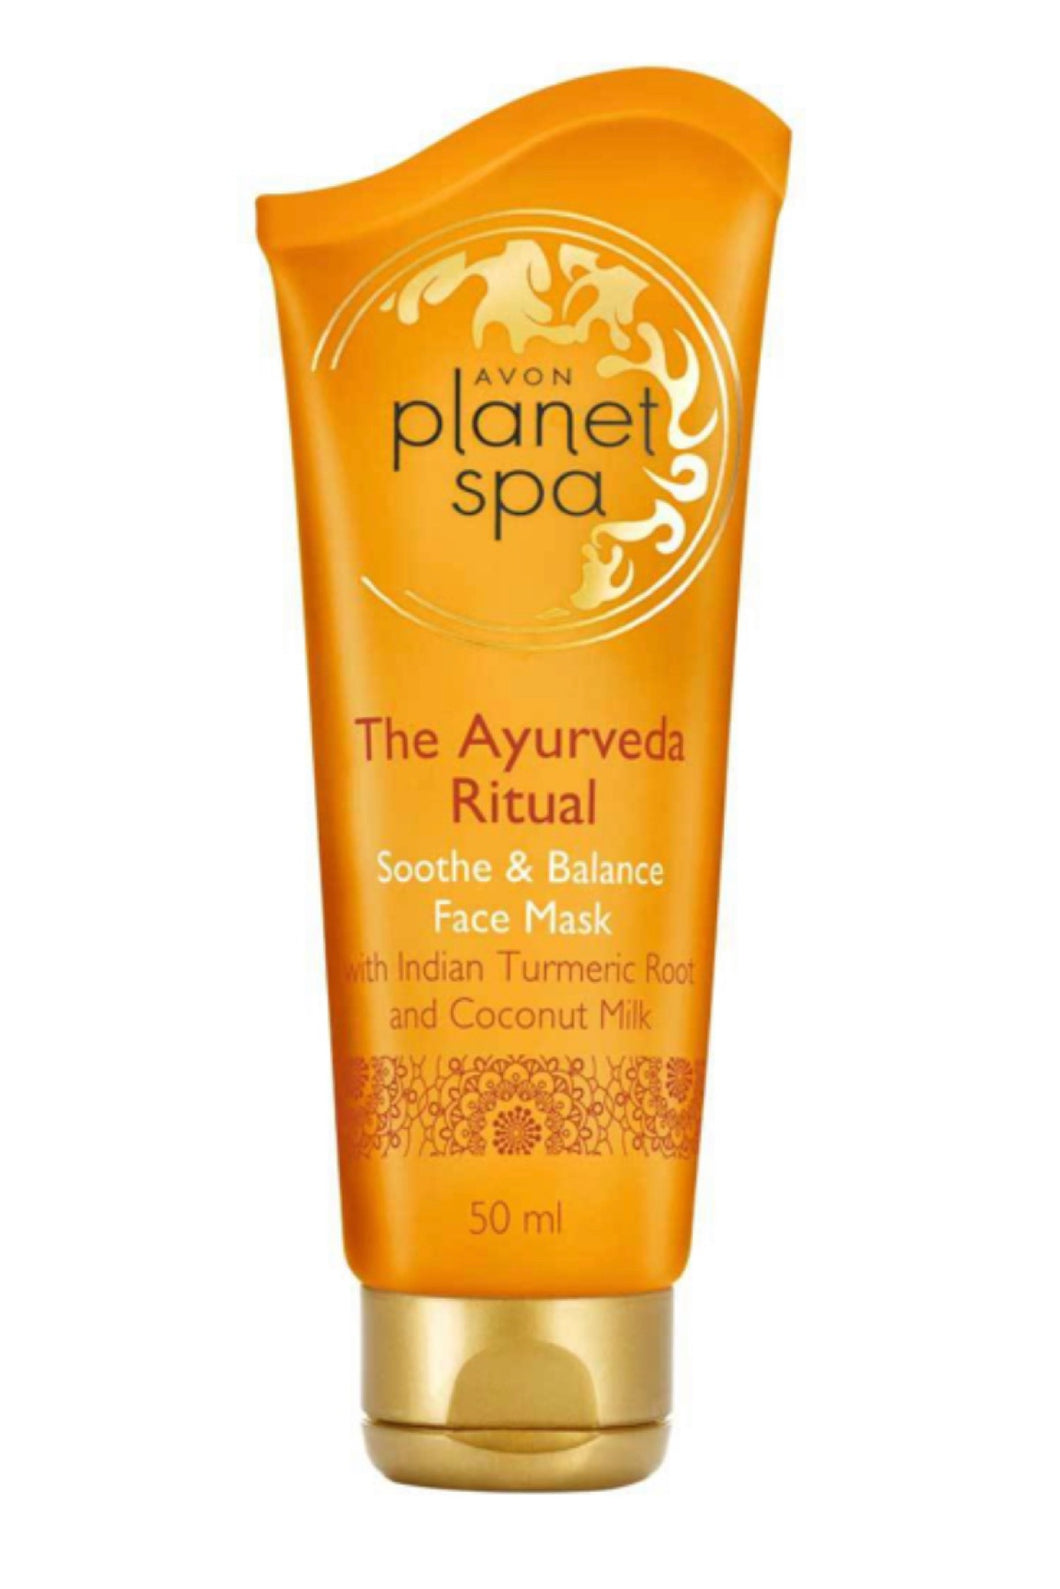 Planet Spa The Ayurveda Ritual Soothe & Balance Face Mask 50ml